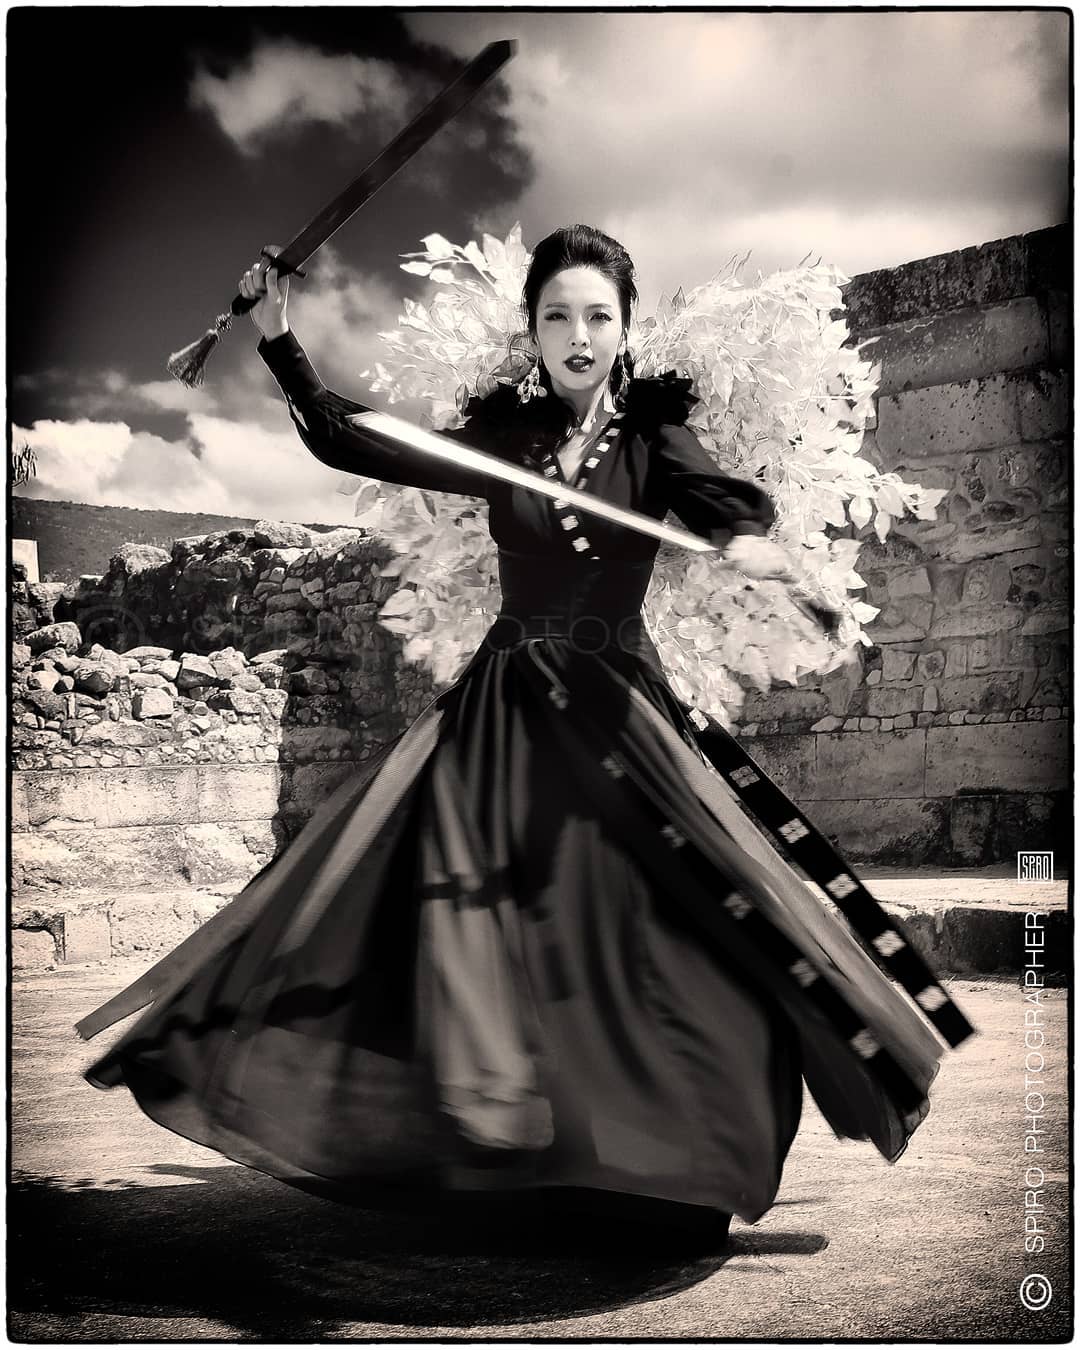 BEAUTY, STRENGTH, HONOR
BELLEZA, FUERZA, HONOR

KOREAN WARRIOR PRINCESS
@dojeonglee

Photographed in Oaxaca city,
for @missglobalofficial © copyright
@spiro_photographer
Spiro Polichronopoulos

Assistant: @dabeatlo

#warriorprincess #ellegance #gorgeous #strength #grace #power #model #modeling #woman #photography #photographerlife #mexico #mexicanphotographer #mexicofotografo #missglobalofficial #oaxacafotografo #oaxaca #korea #asianbeauty #analogue #analogphotography #blackandwhite #bestjobintheworld #bestjobever #luckyme